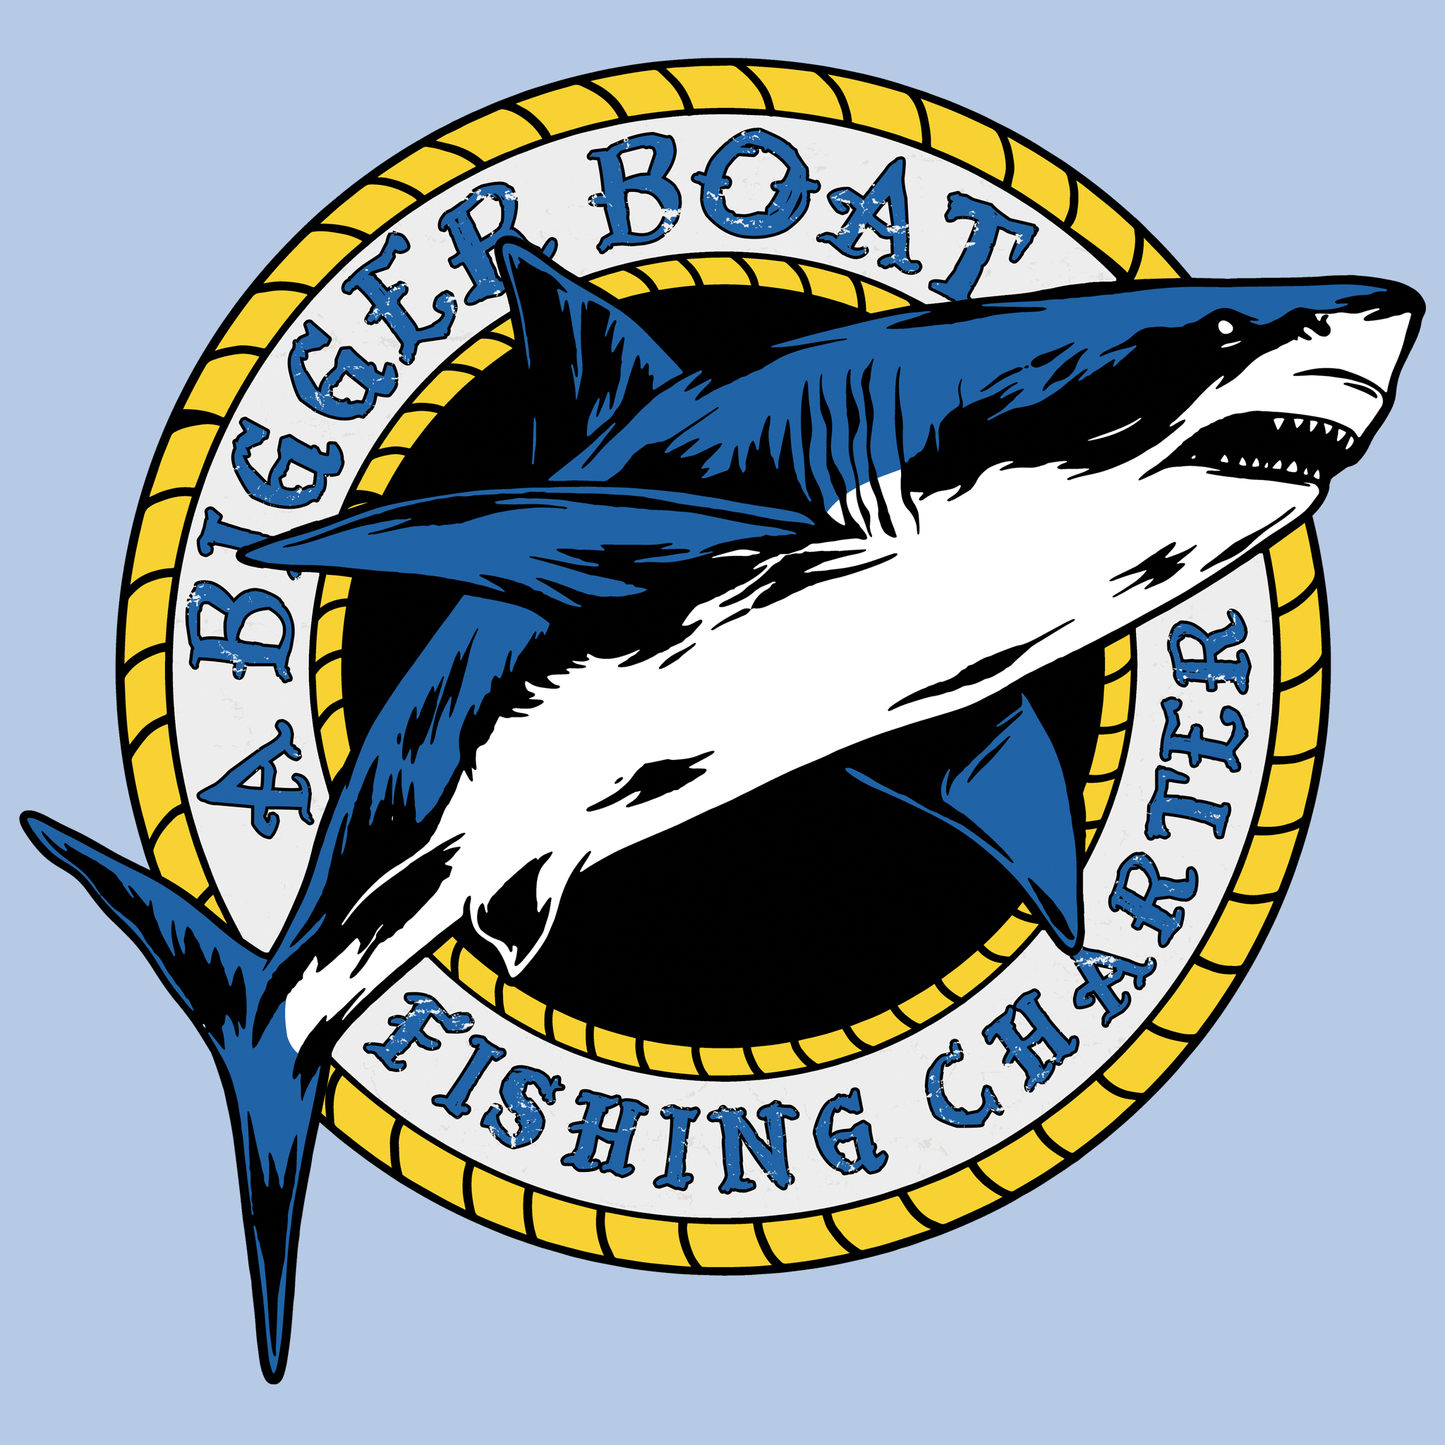 A Bigger Boat Fishing Charter T-Shirt